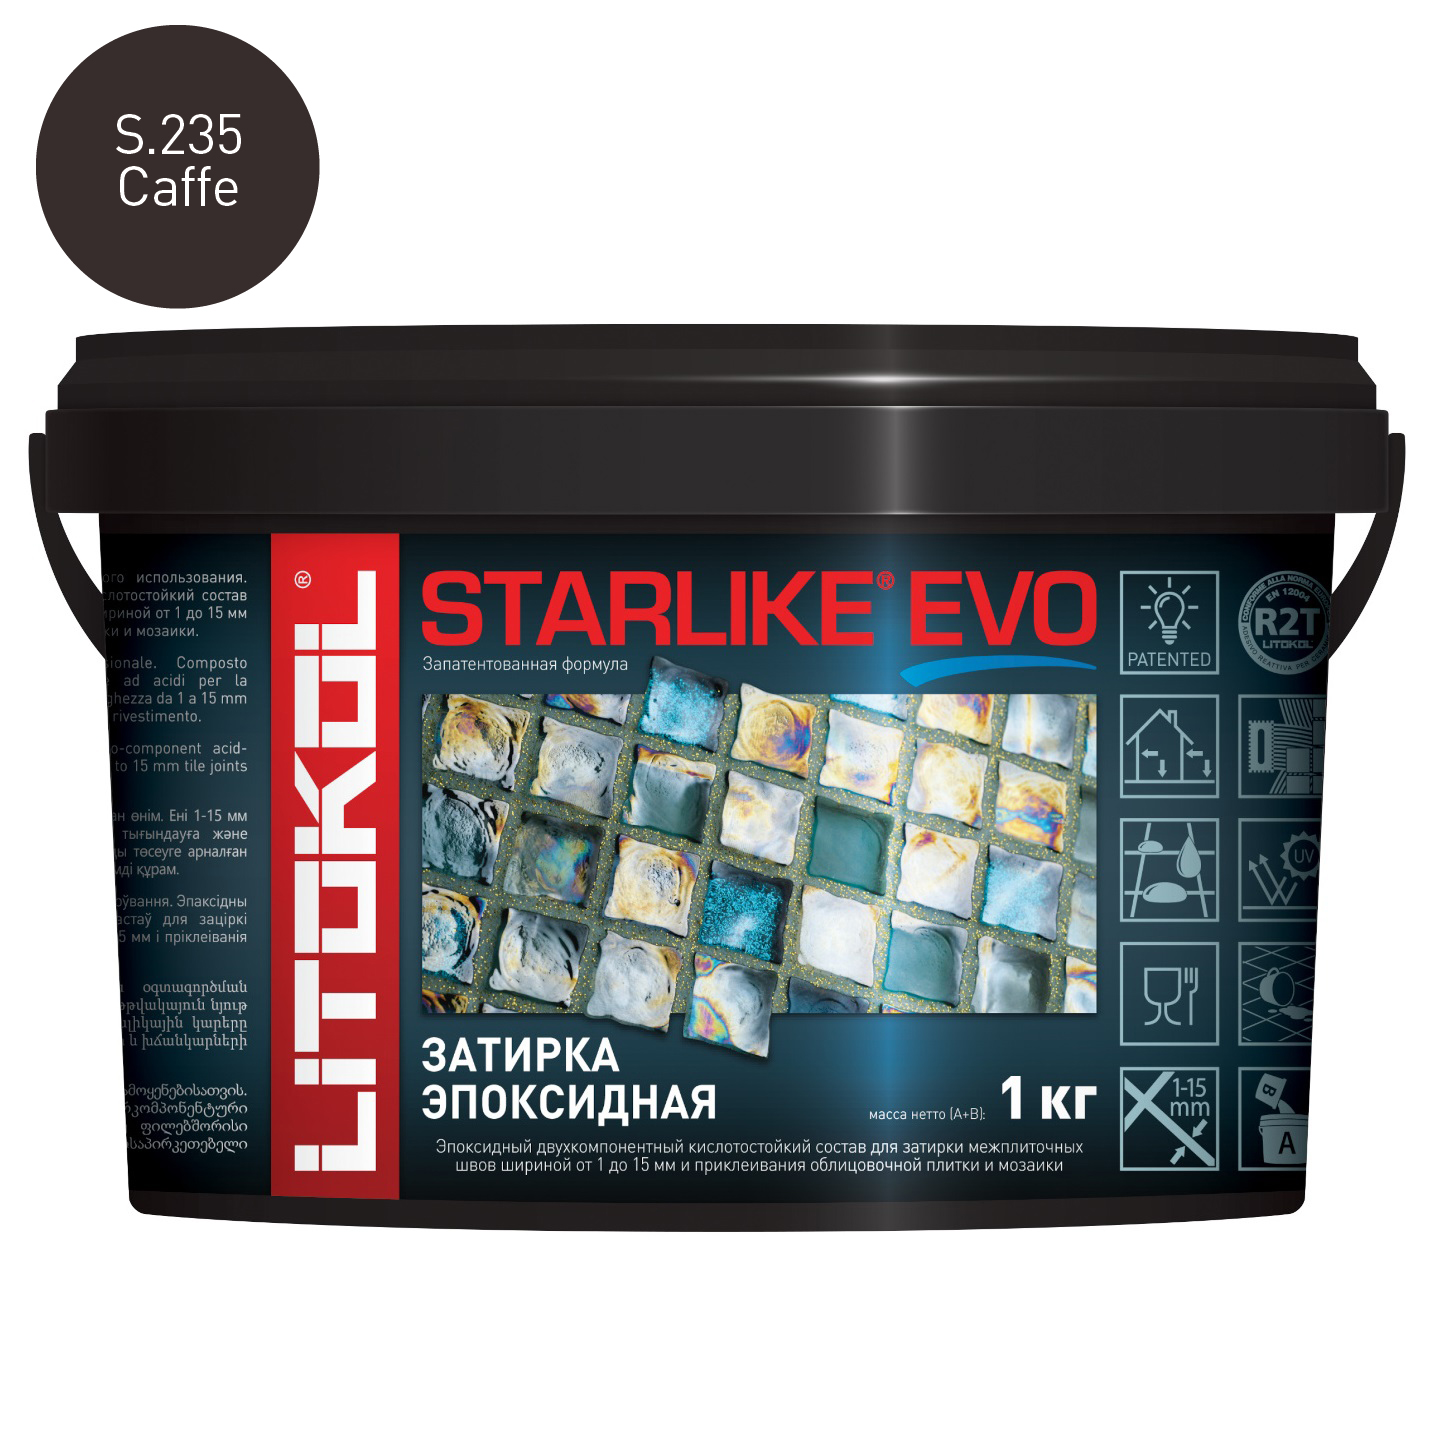 Затирка эпоксидная Litokol Starlike Evo S.235 Caffe (1 кг.)